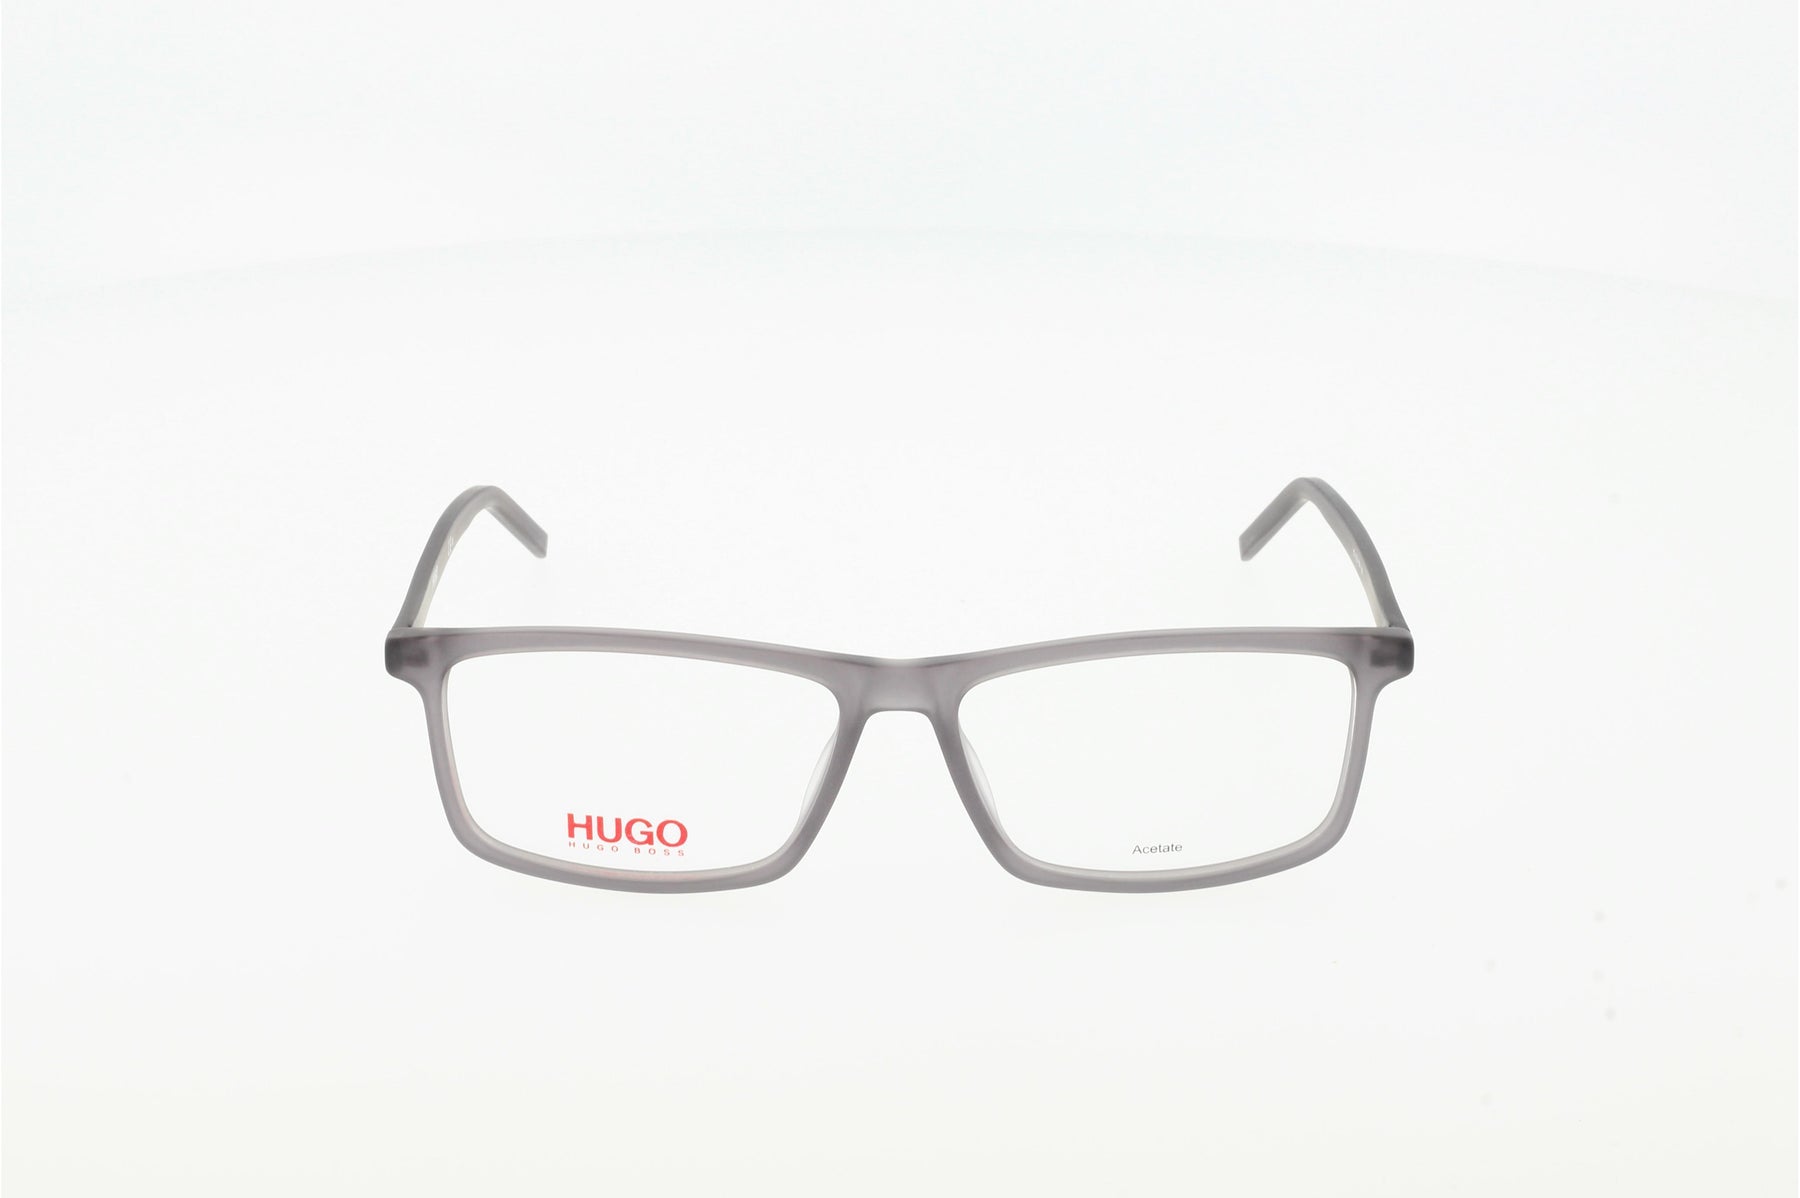 Vista-1 - Gafas oftálmicas Hugo HG 1025 Hombre Color Gris